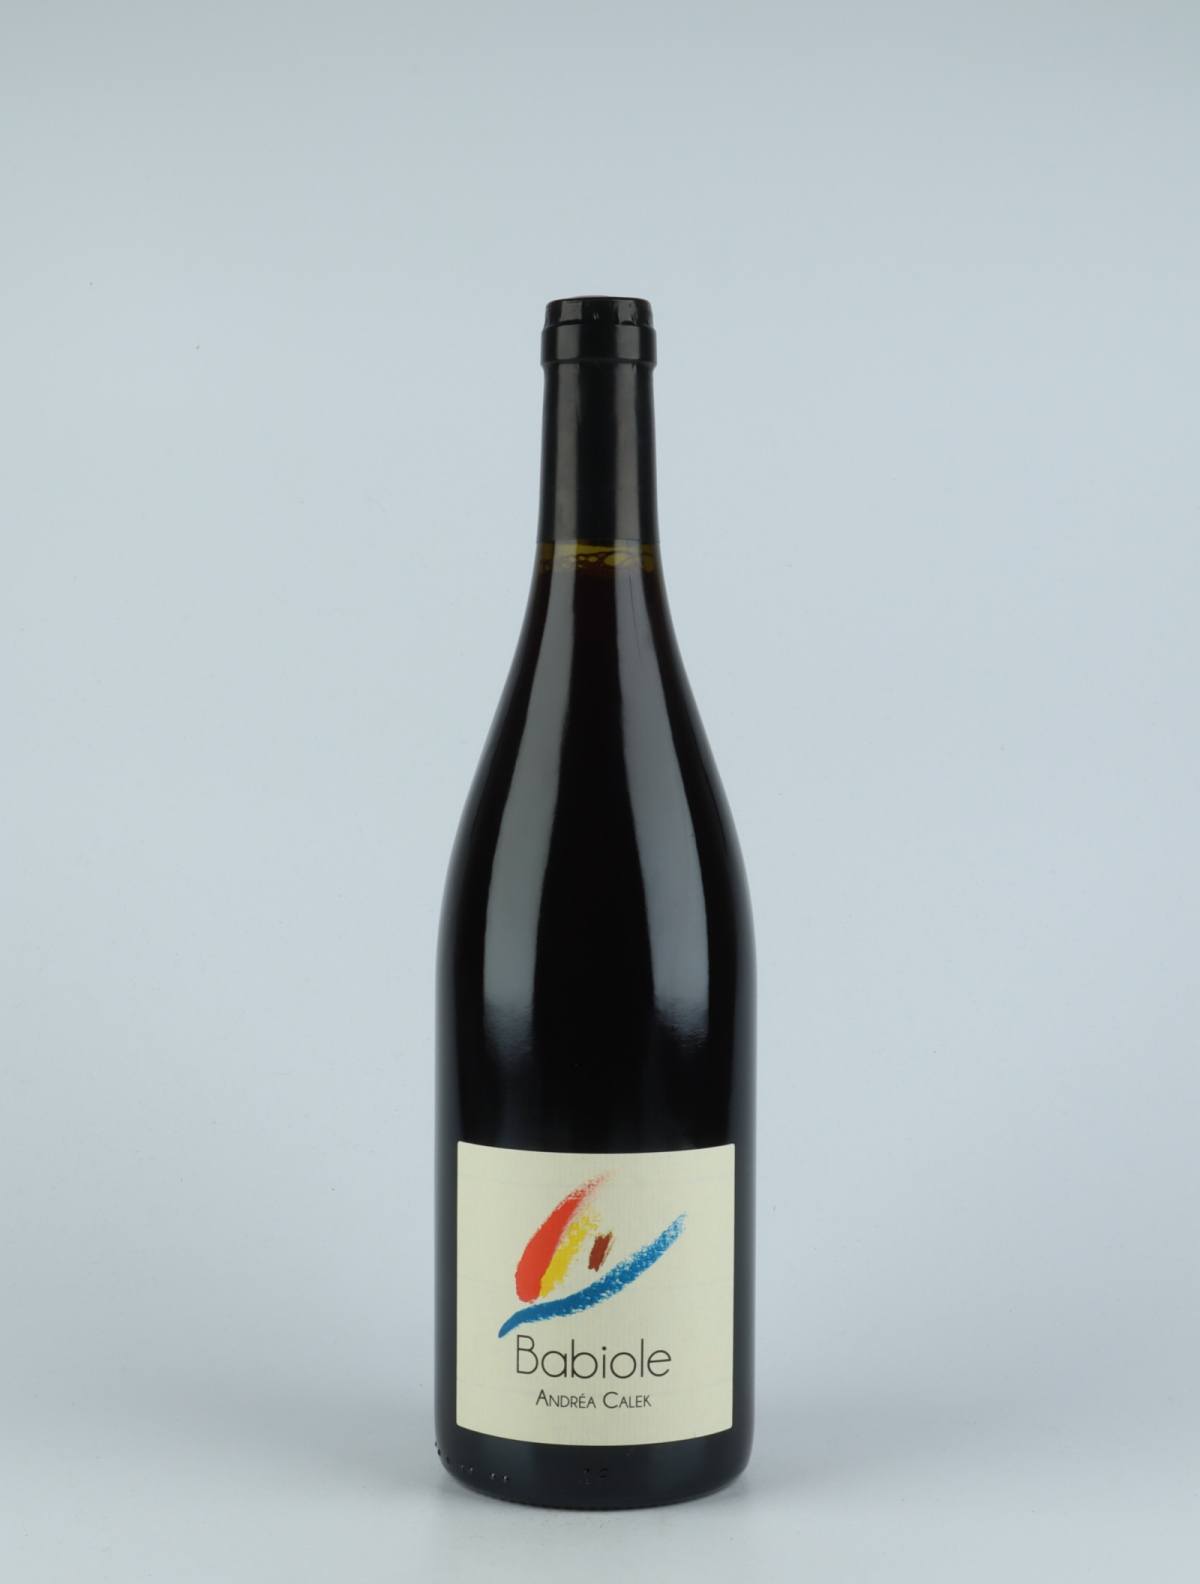 A bottle 2020 Babiole Red wine from Andrea Calek, Ardèche in France